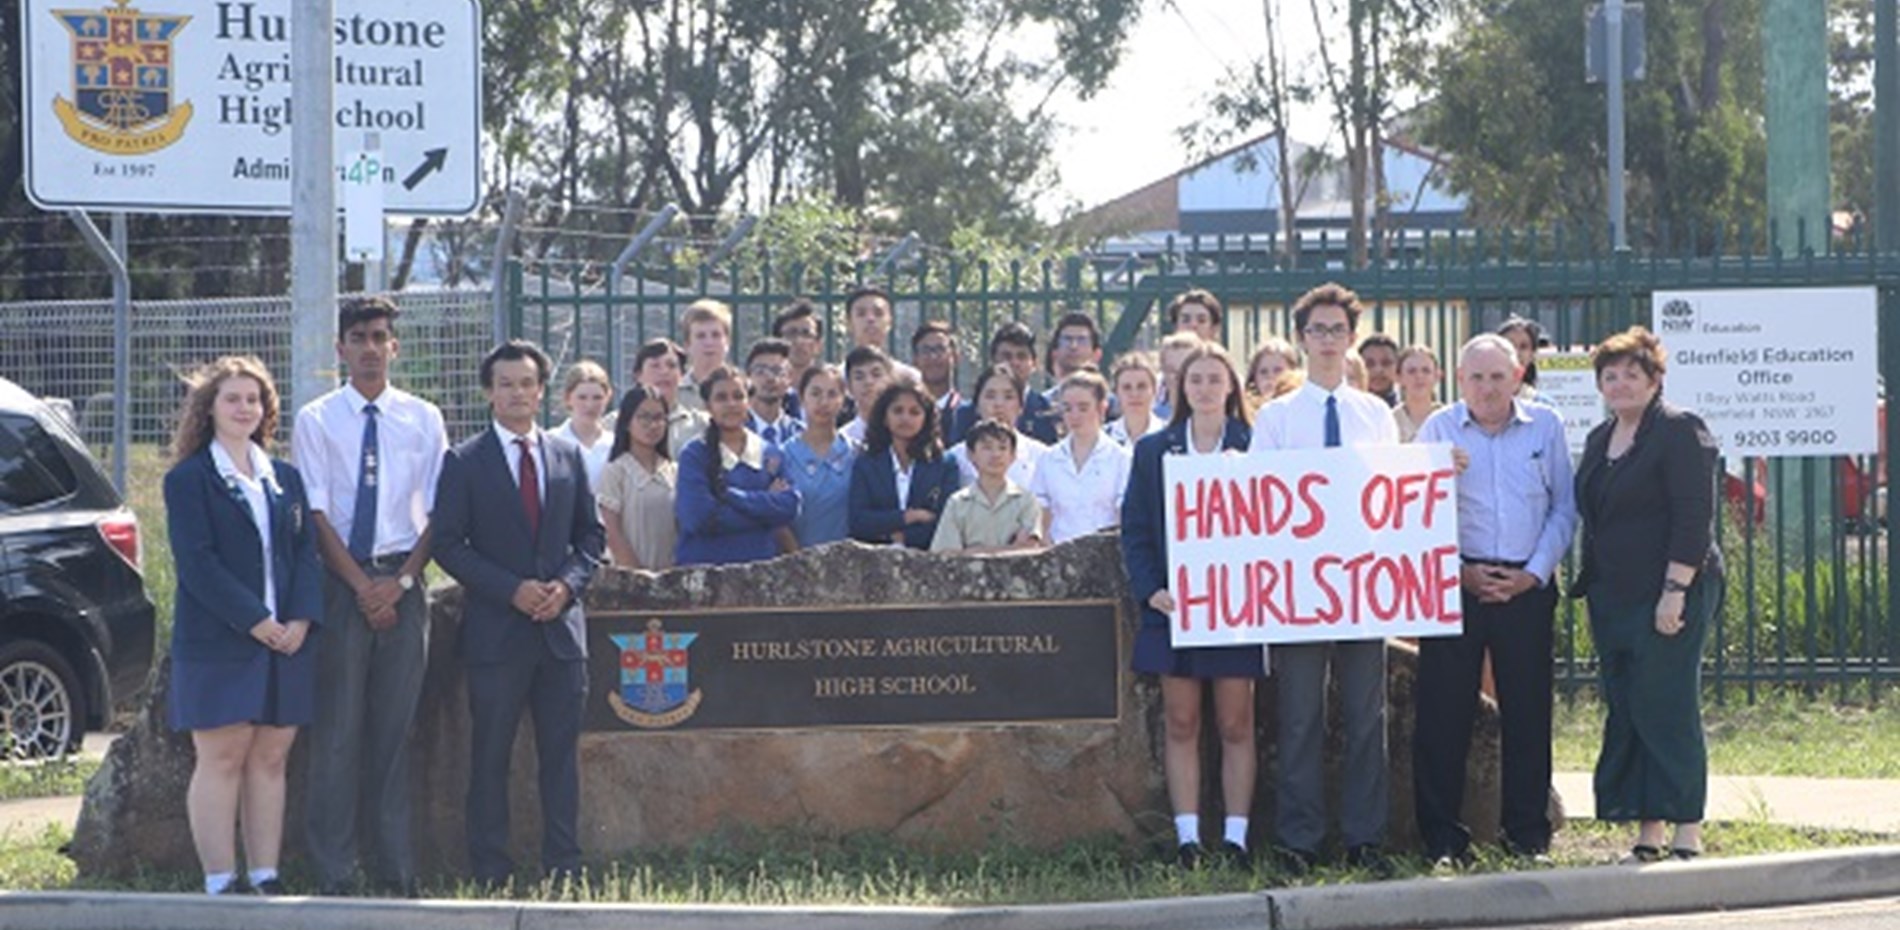 Hands off Hurlstone Main Image